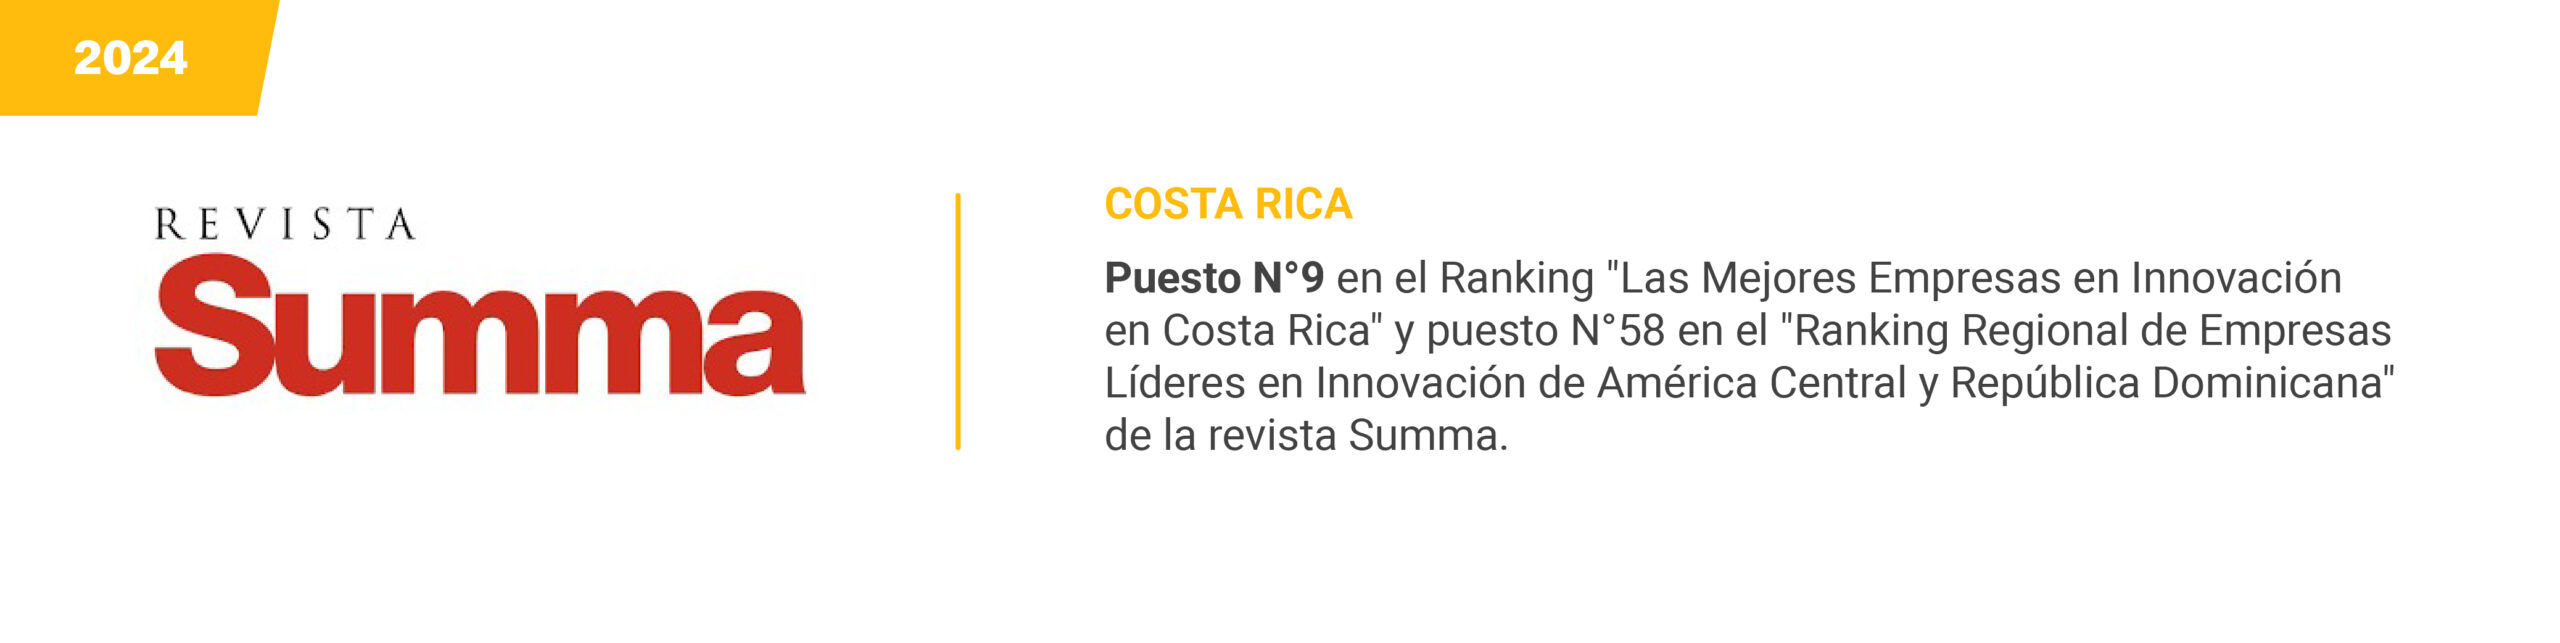 SUMMA - Costa Rica 2024